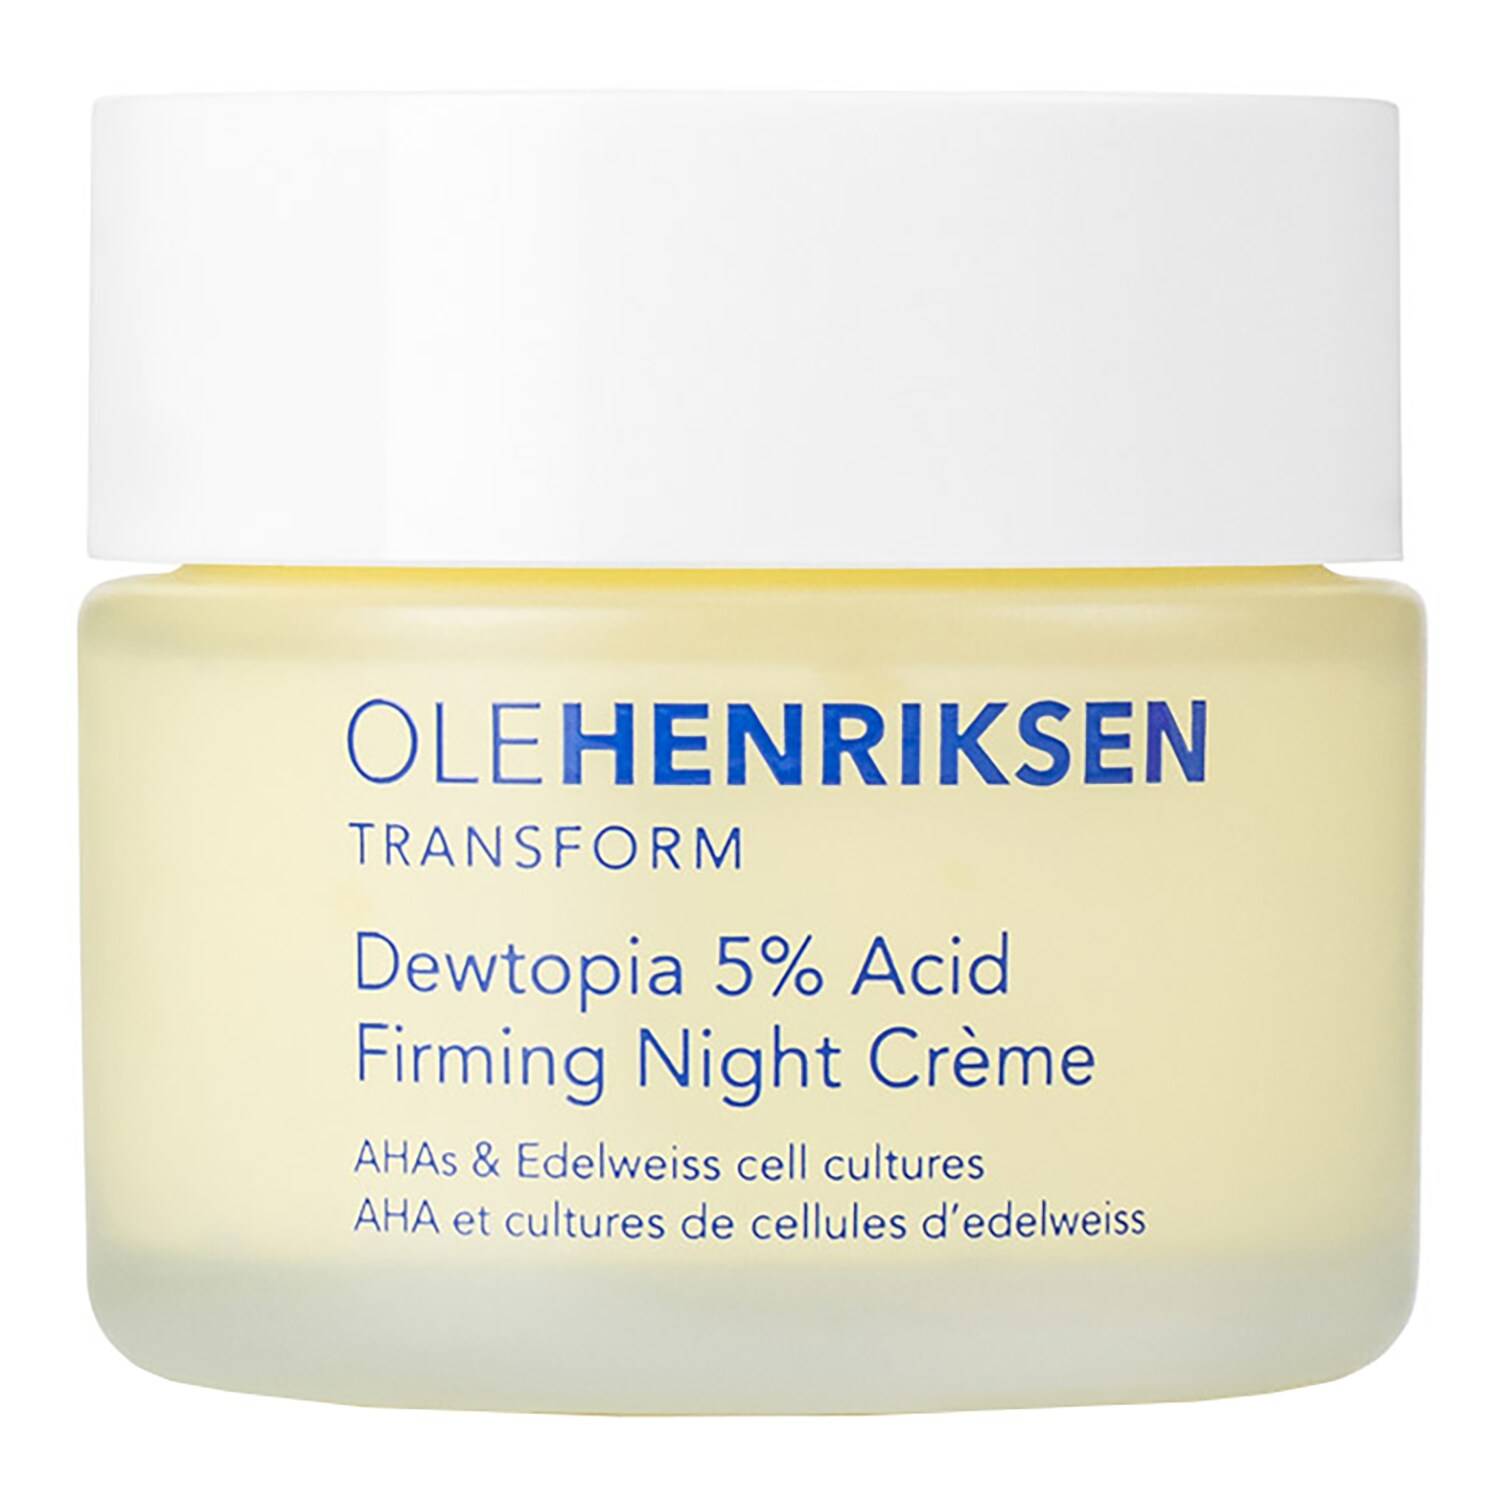 Ole Henriksen Dewtopia 5% Acid Firming Night Cr�me 50ml